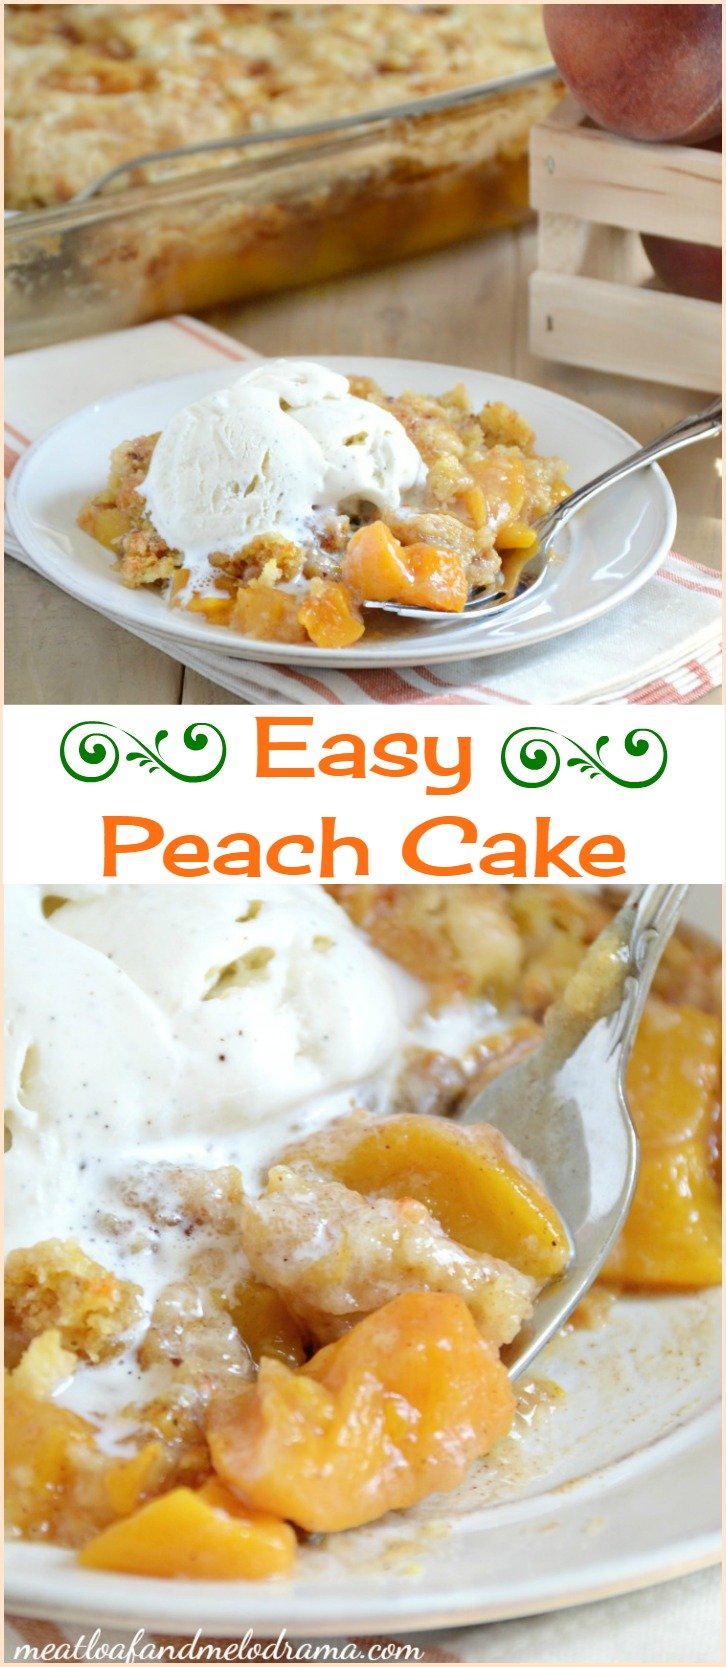 easy peach cake commonly called peach dump cake